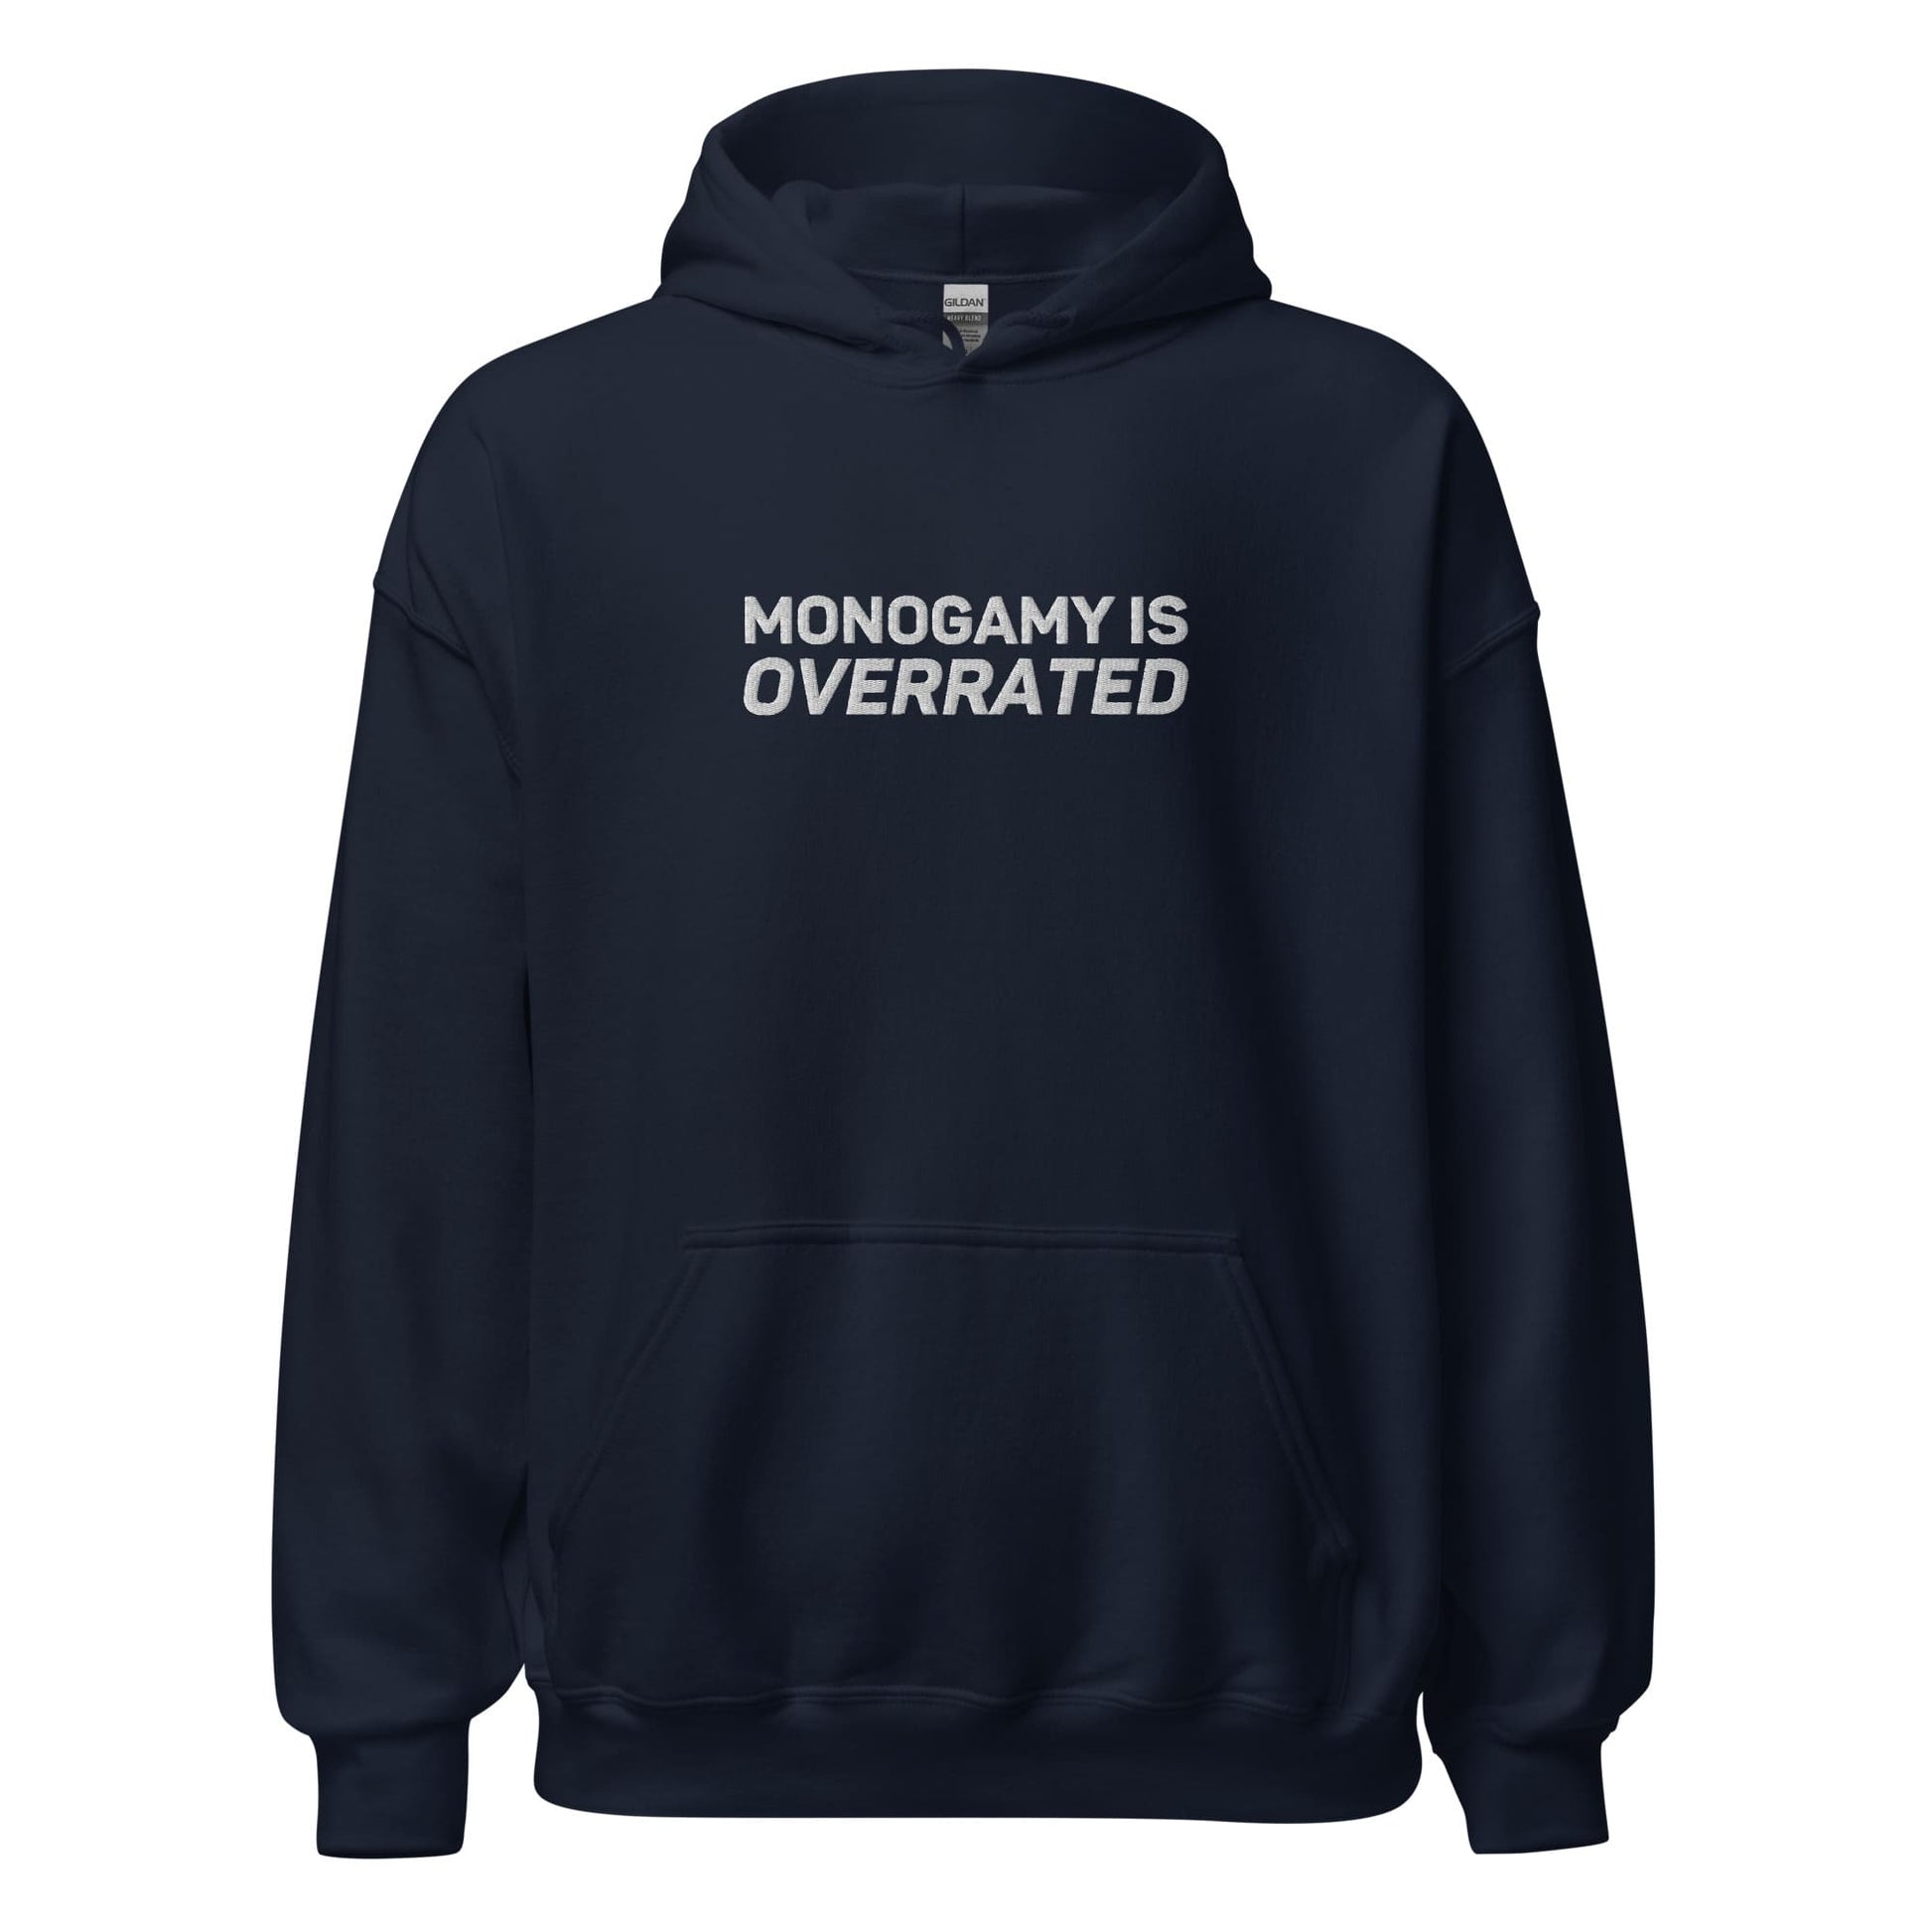 polyamory hoodie, statement polyamorous pride embroidered hooded sweatshirt, navy